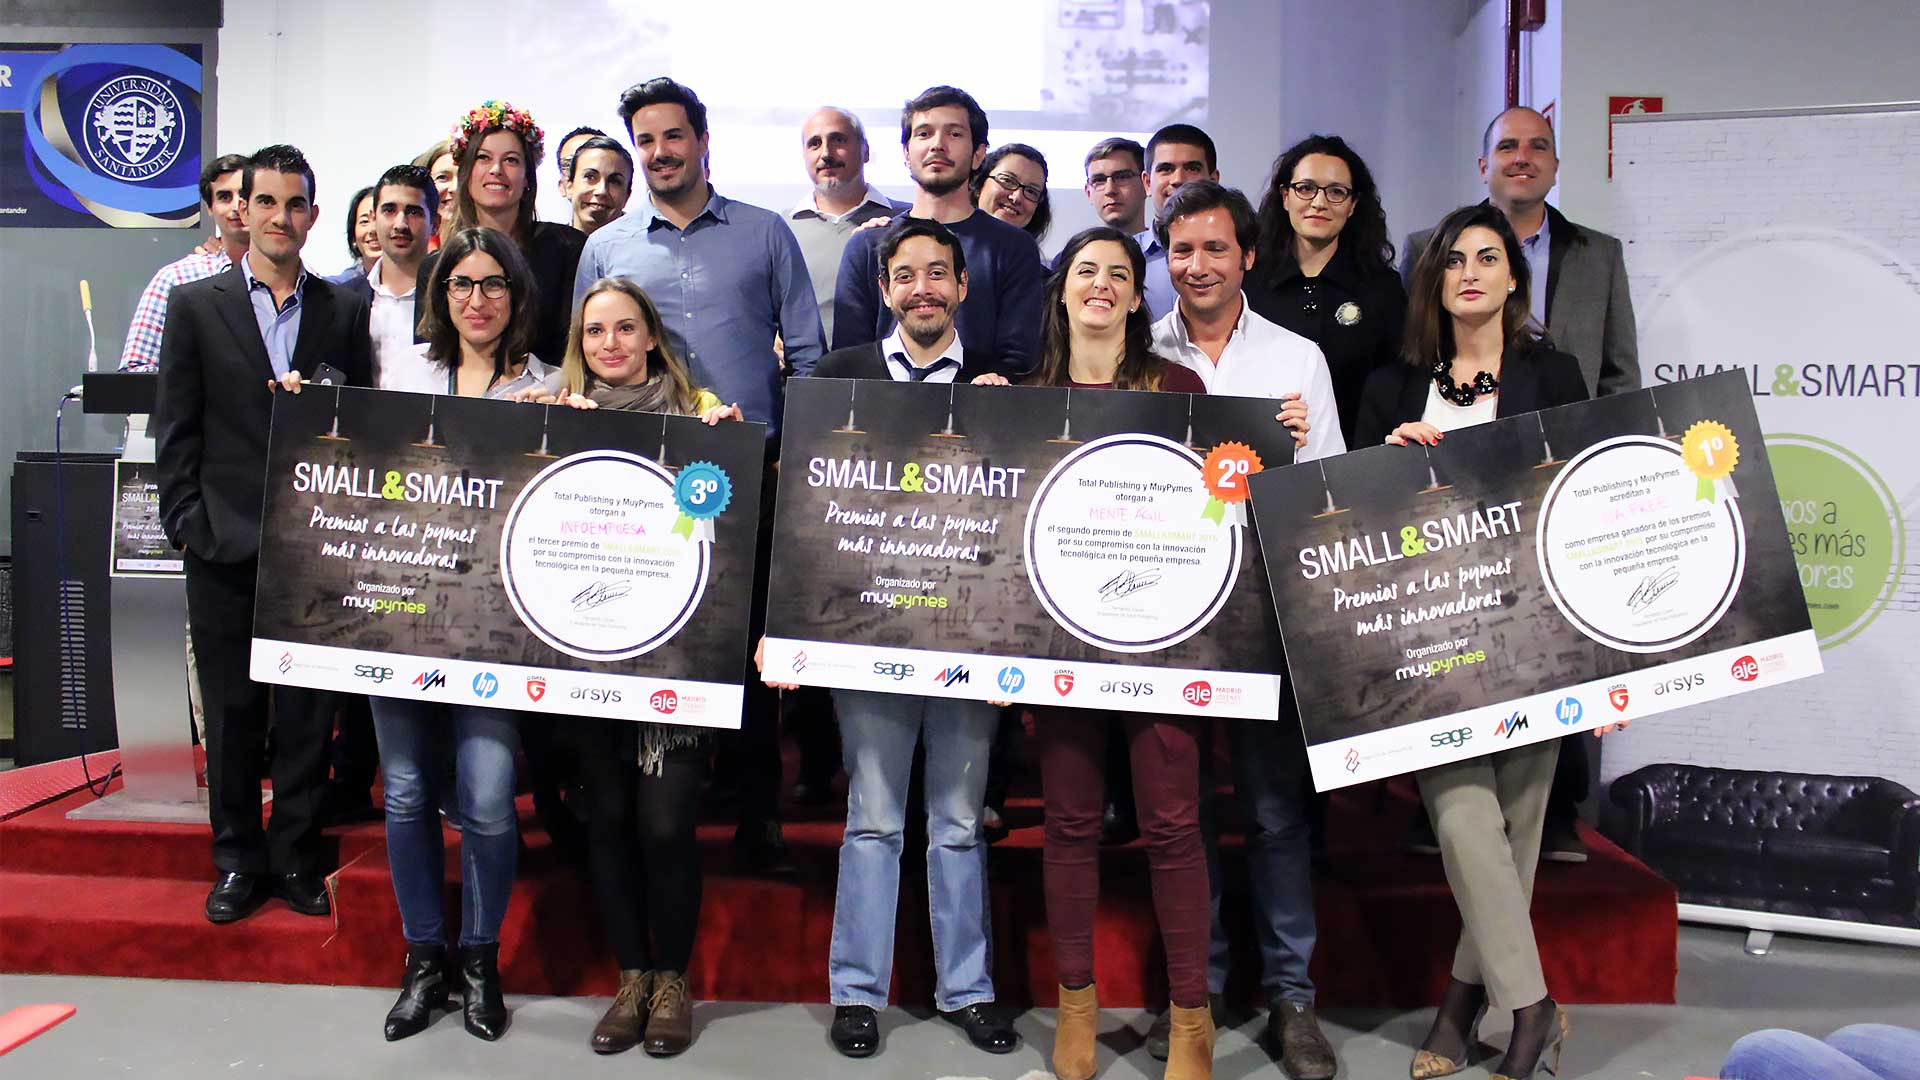 smallsmart-premios-startups-pymes-2015-ganadores-1